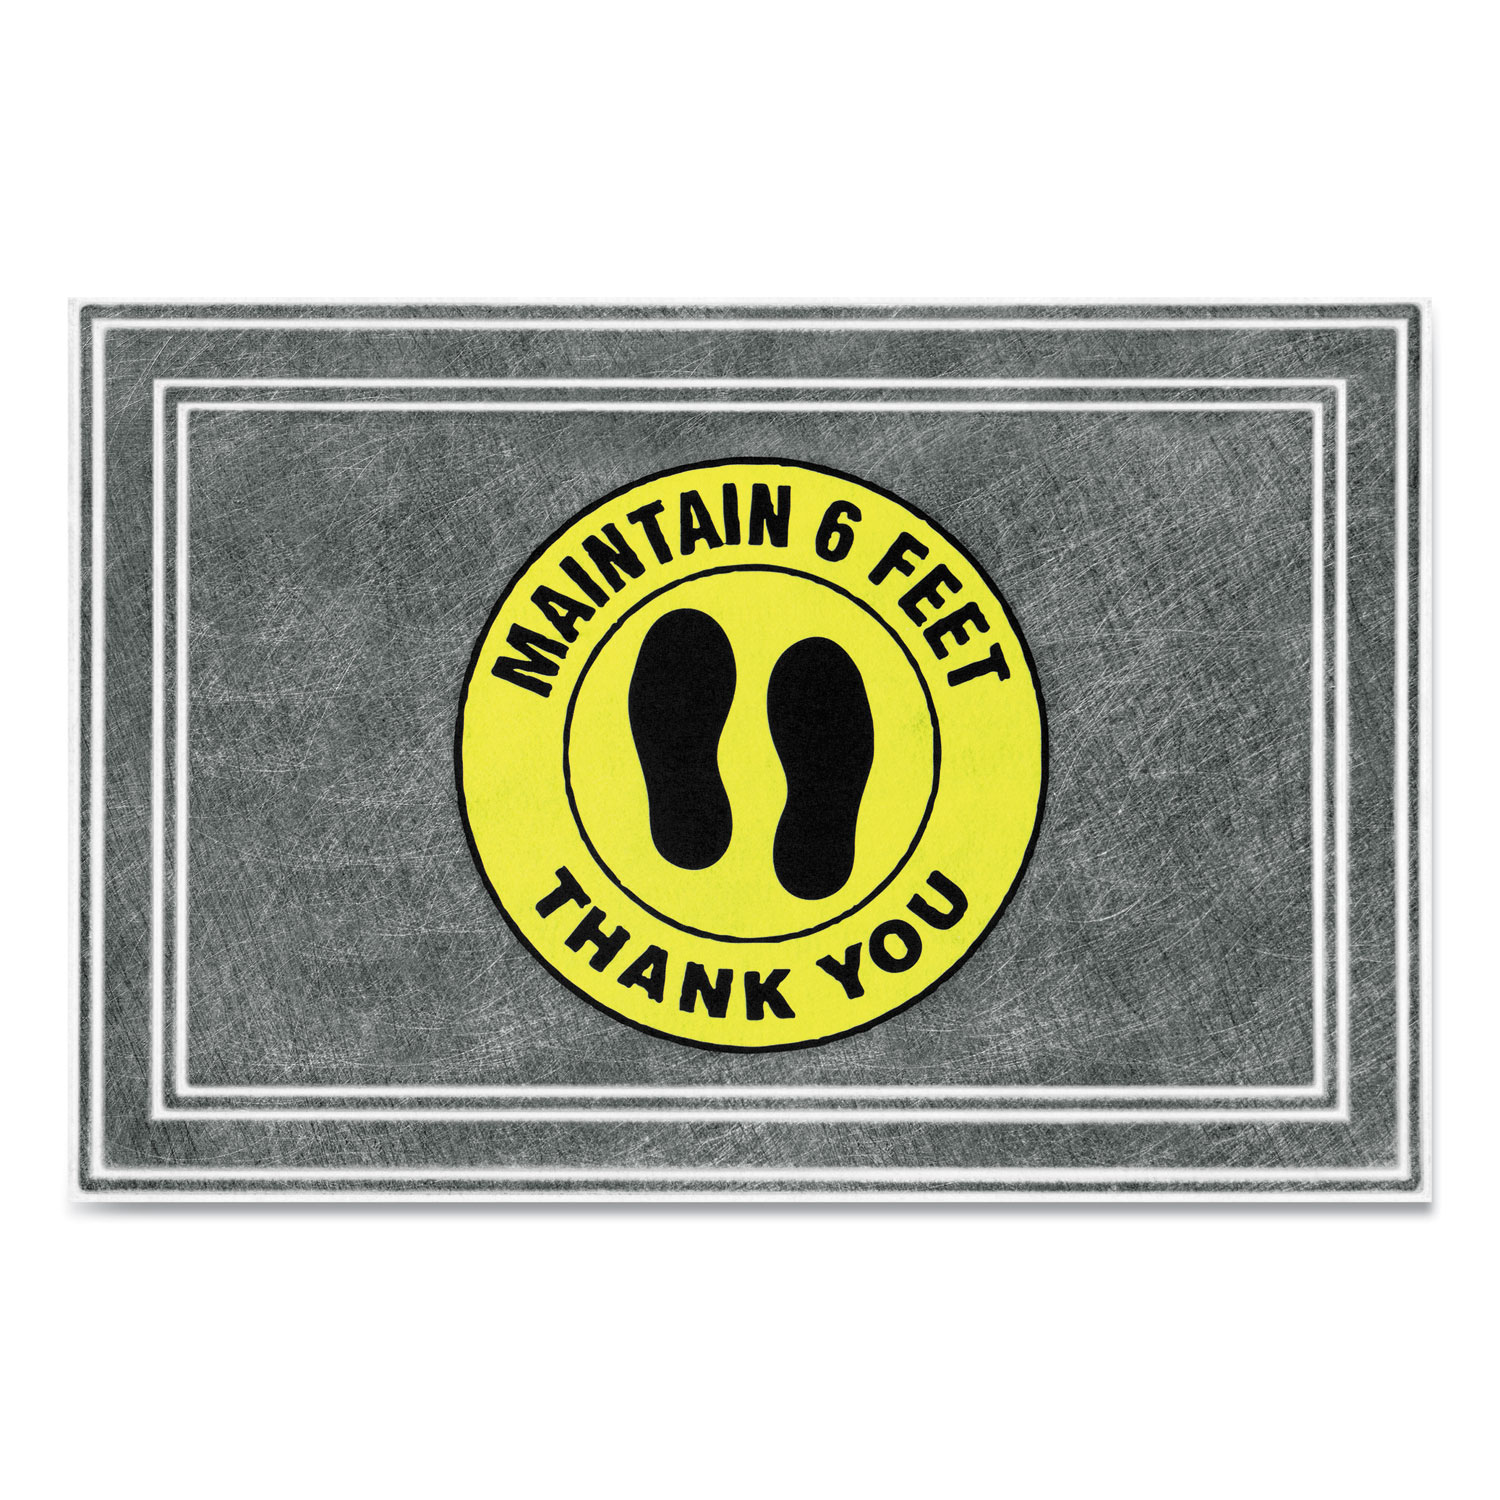 Apache Mills® Message Floor Mats, 24 x 36, Charcoal/Yellow, Maintain 6 Feet Thank You